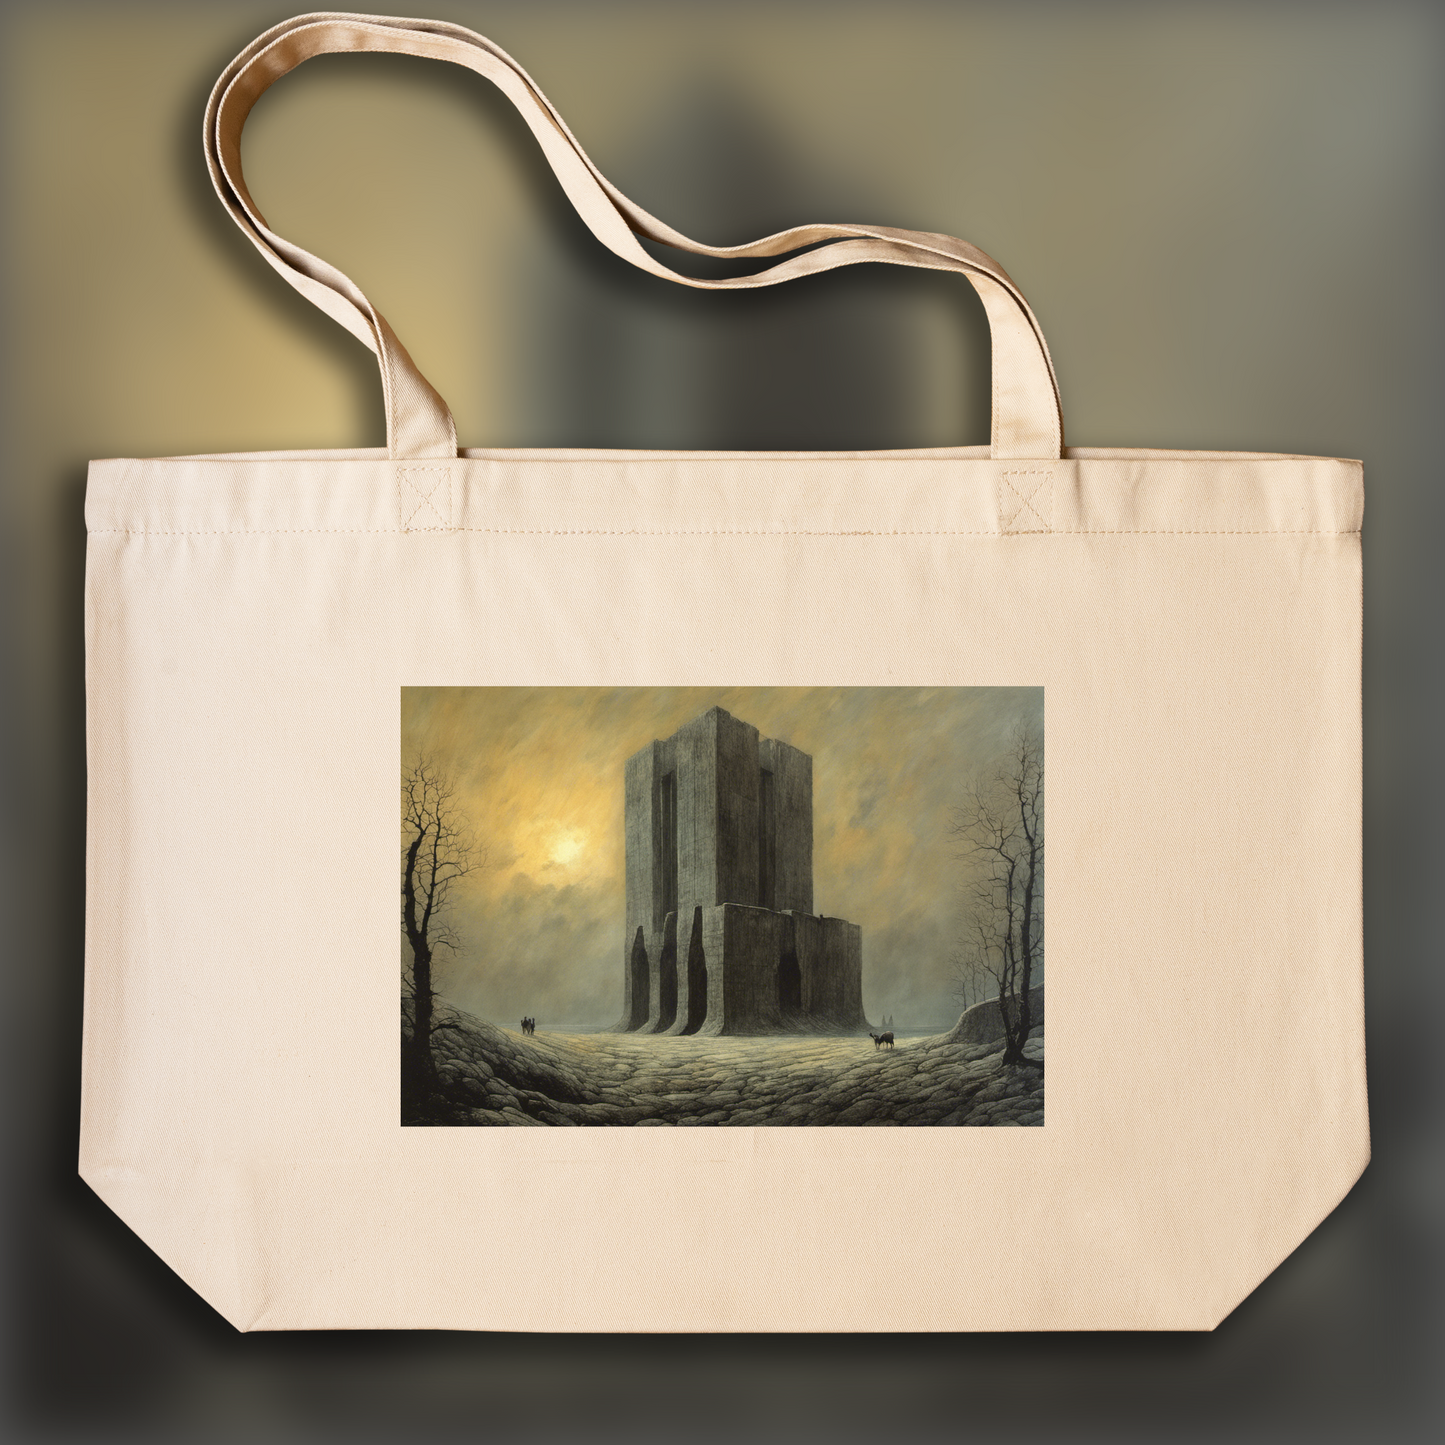 Tote bag large - Illustration of deinforced, atmospheric, dark and mystical band illustration, Brutalist architecture, city - 4013545664